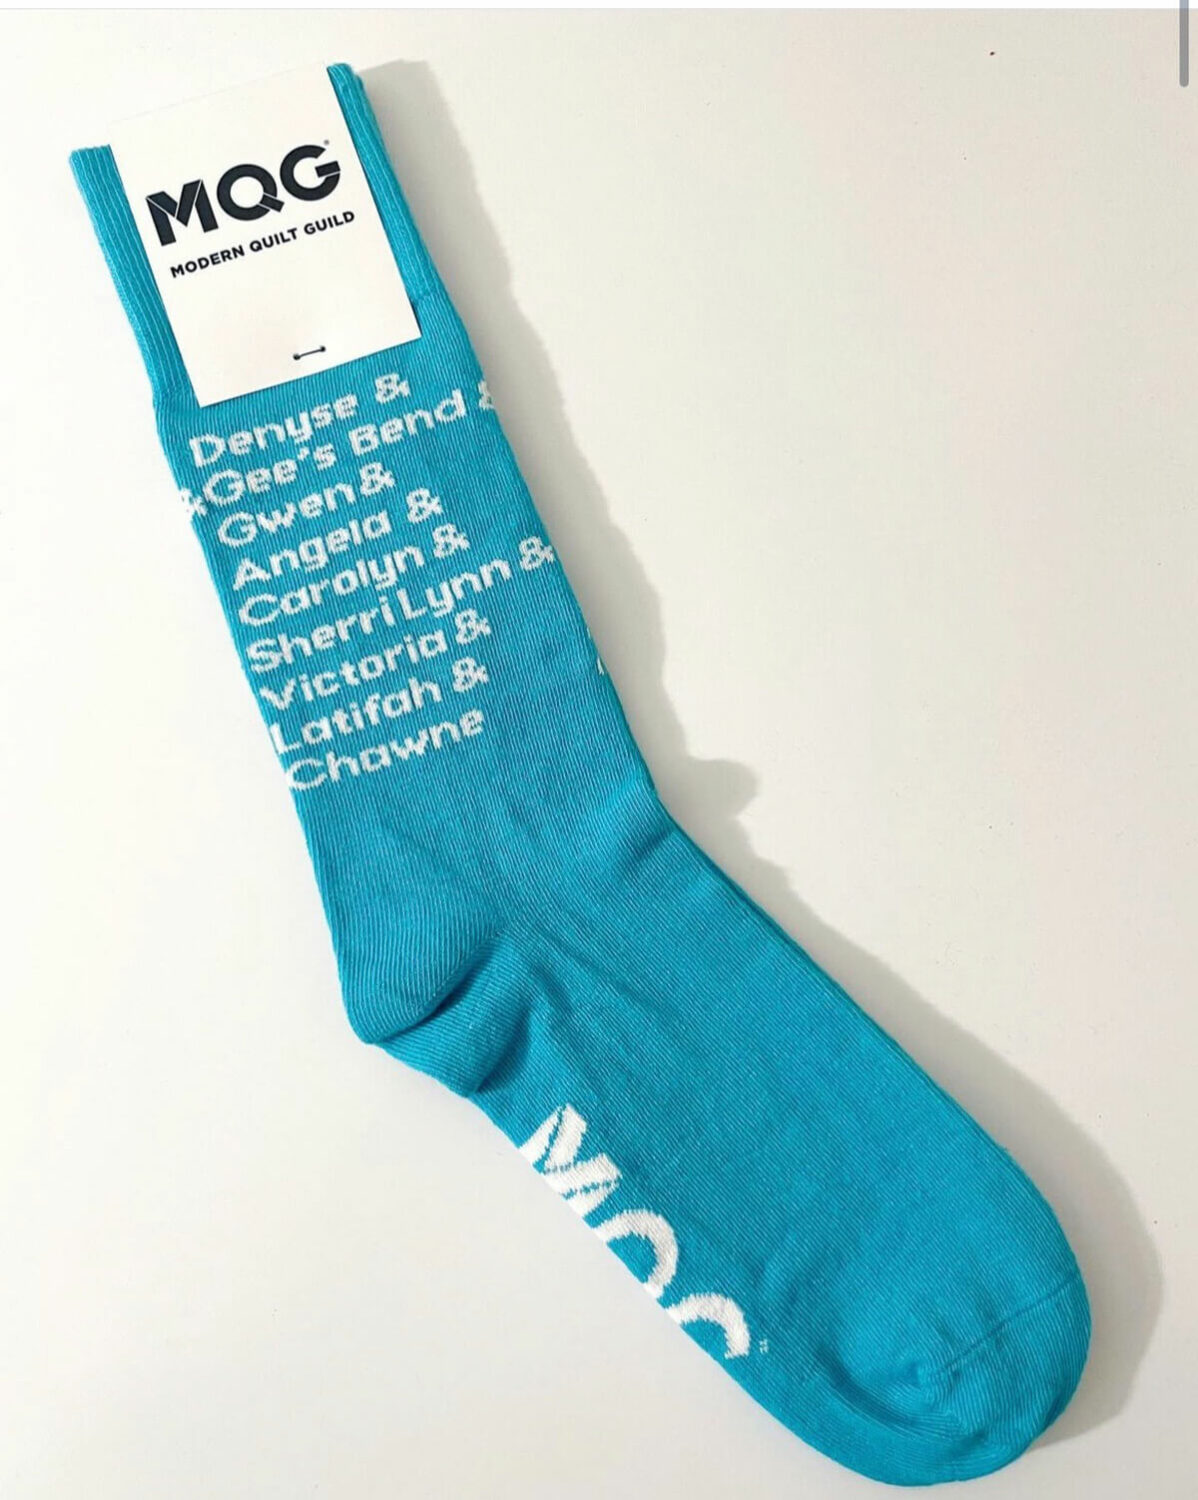 MQG keynote speakers socks